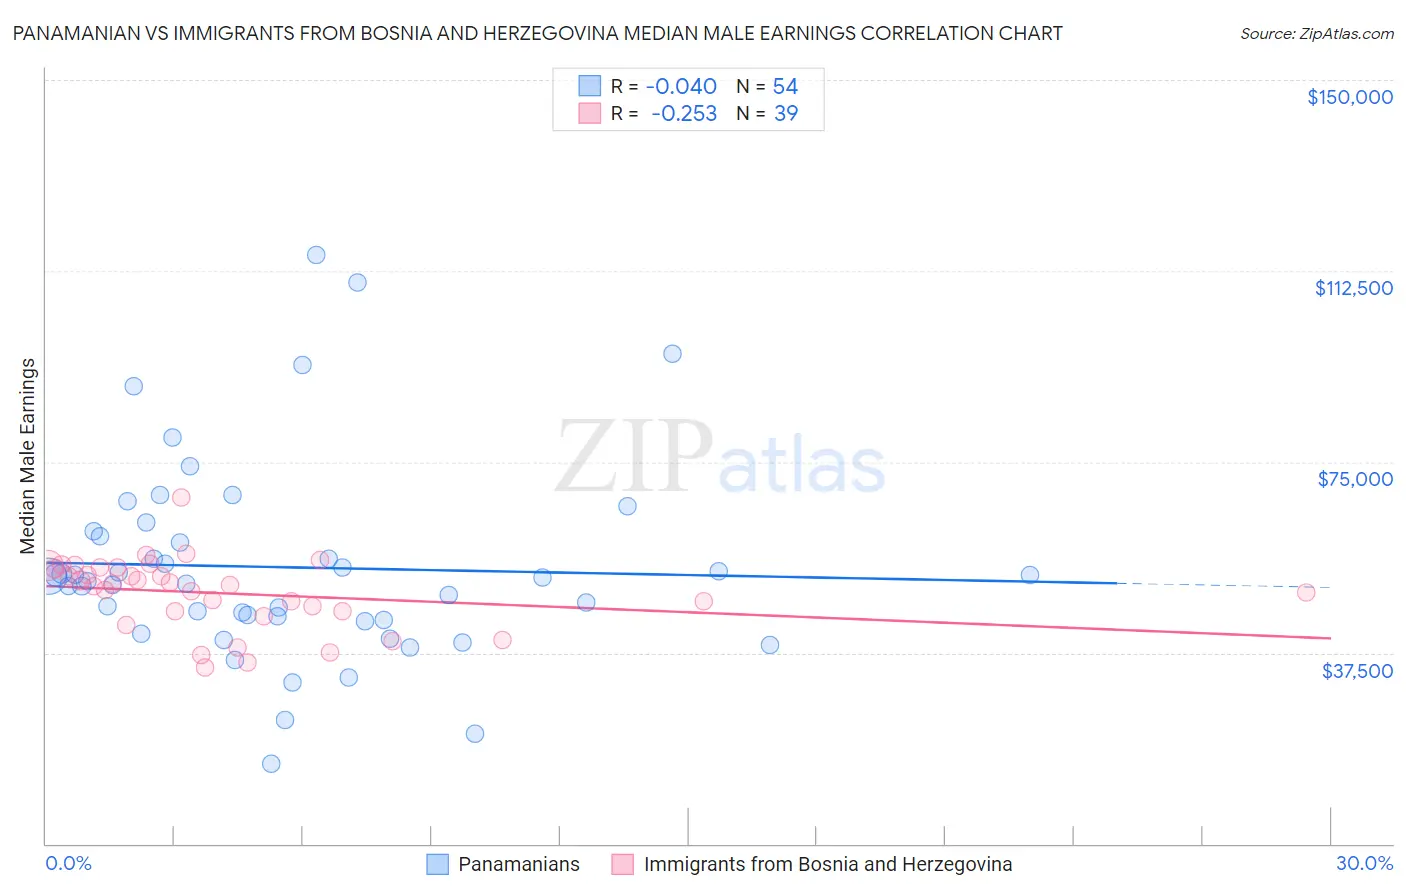 Panamanian vs Immigrants from Bosnia and Herzegovina Median Male Earnings